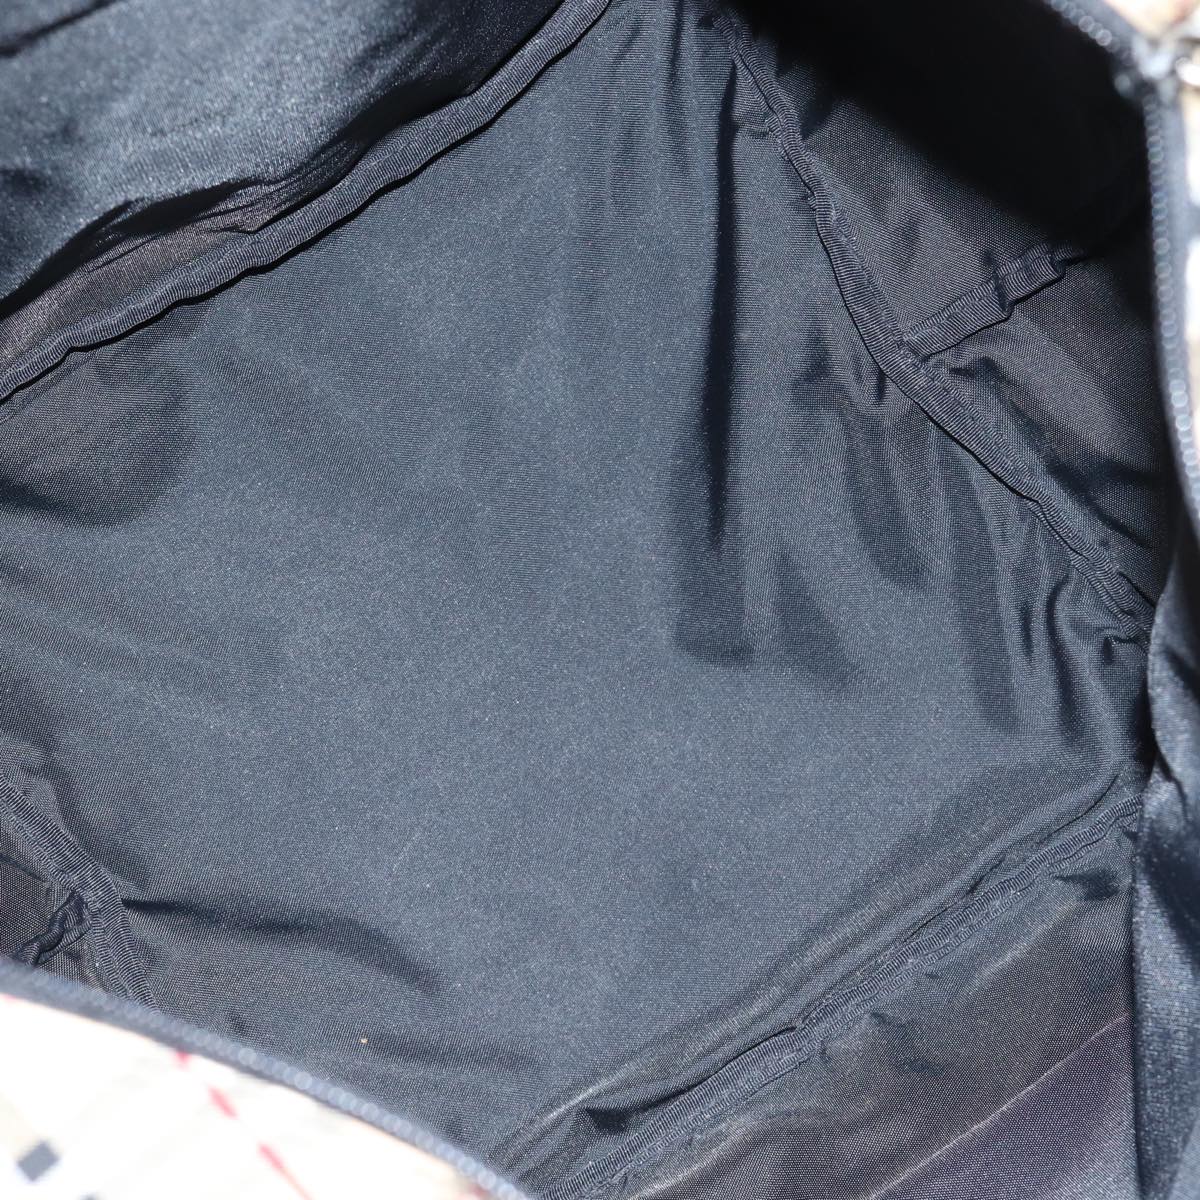 Burberrys Nova Check Blue Label Tote Bag Nylon Black Beige Auth bs13691